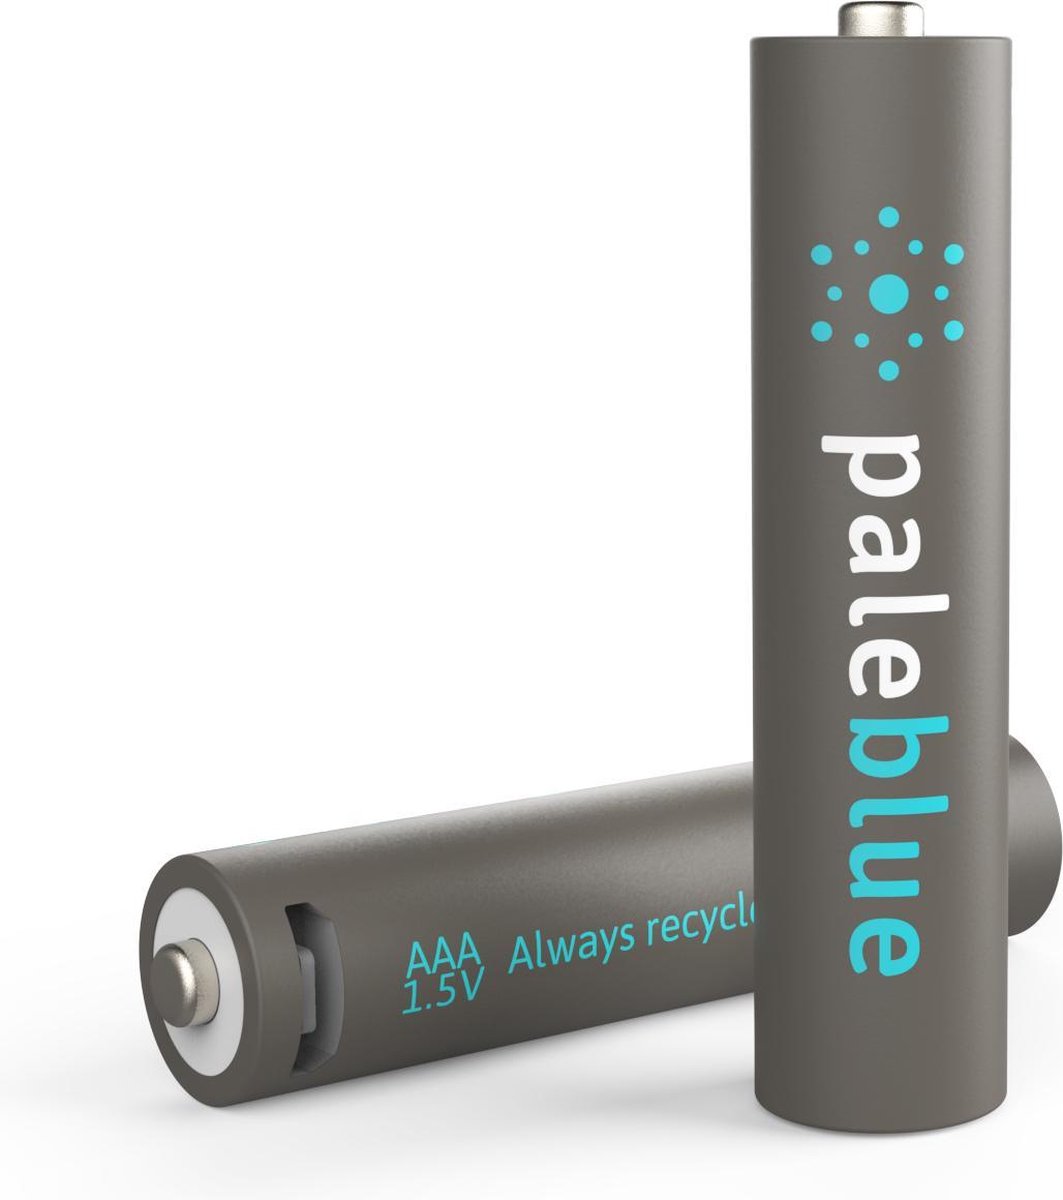 Pale Blue Earth - AAA USB oplaadbare batterijen (4x) - Lithium - lichter, sneller opladen, hoger vermogen, duurzaam